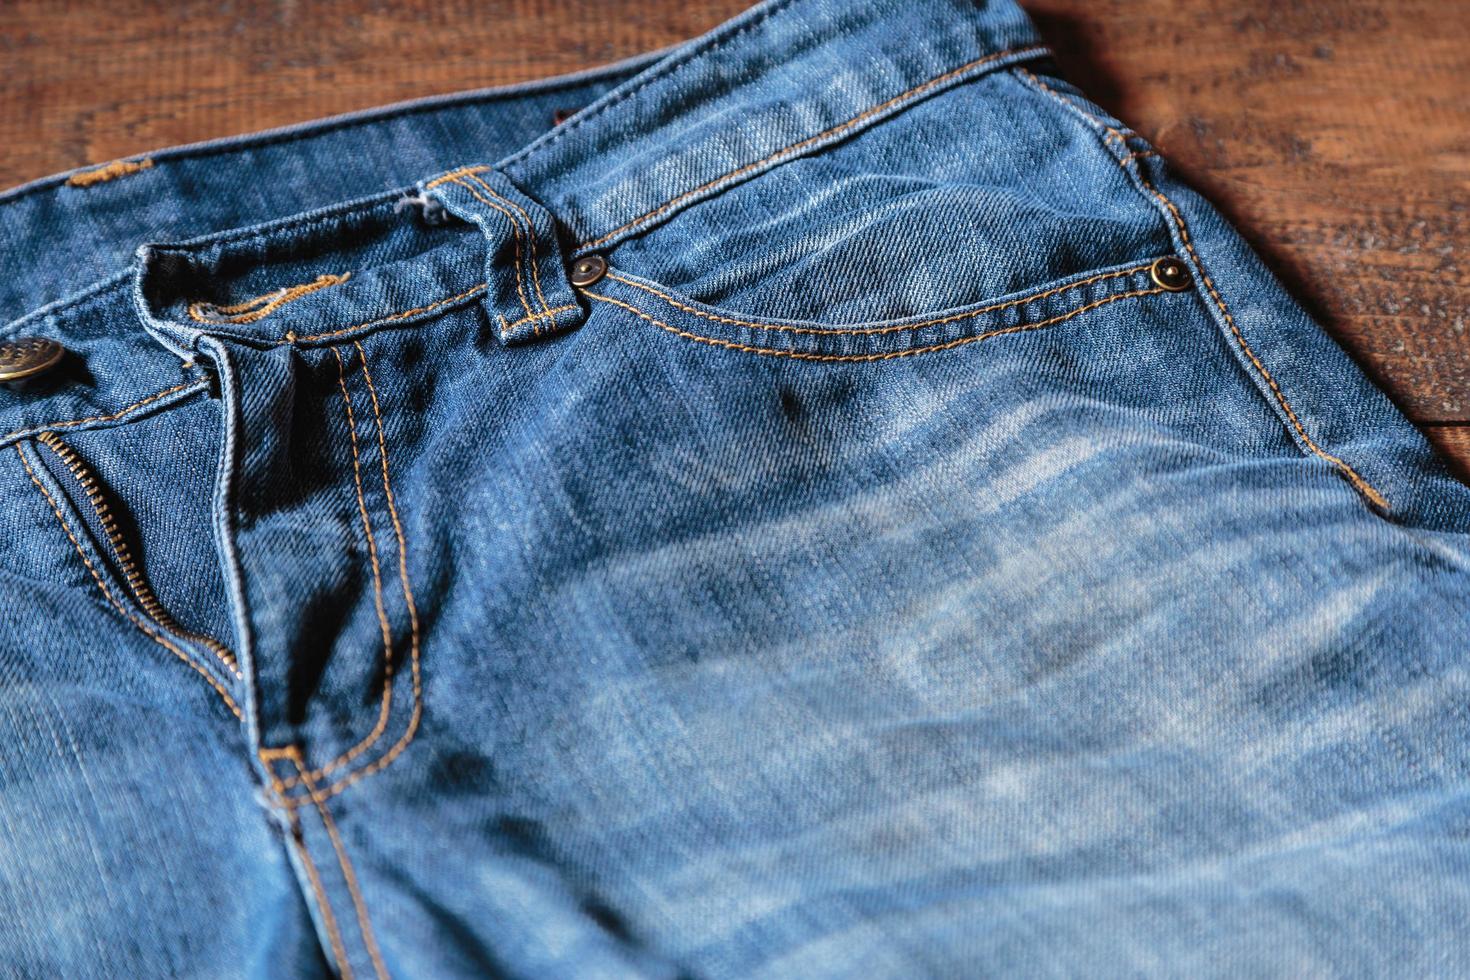 Pantalones de mezclilla azul jeans para hombre sobre fondo de madera. concepto de ropa de moda. foto